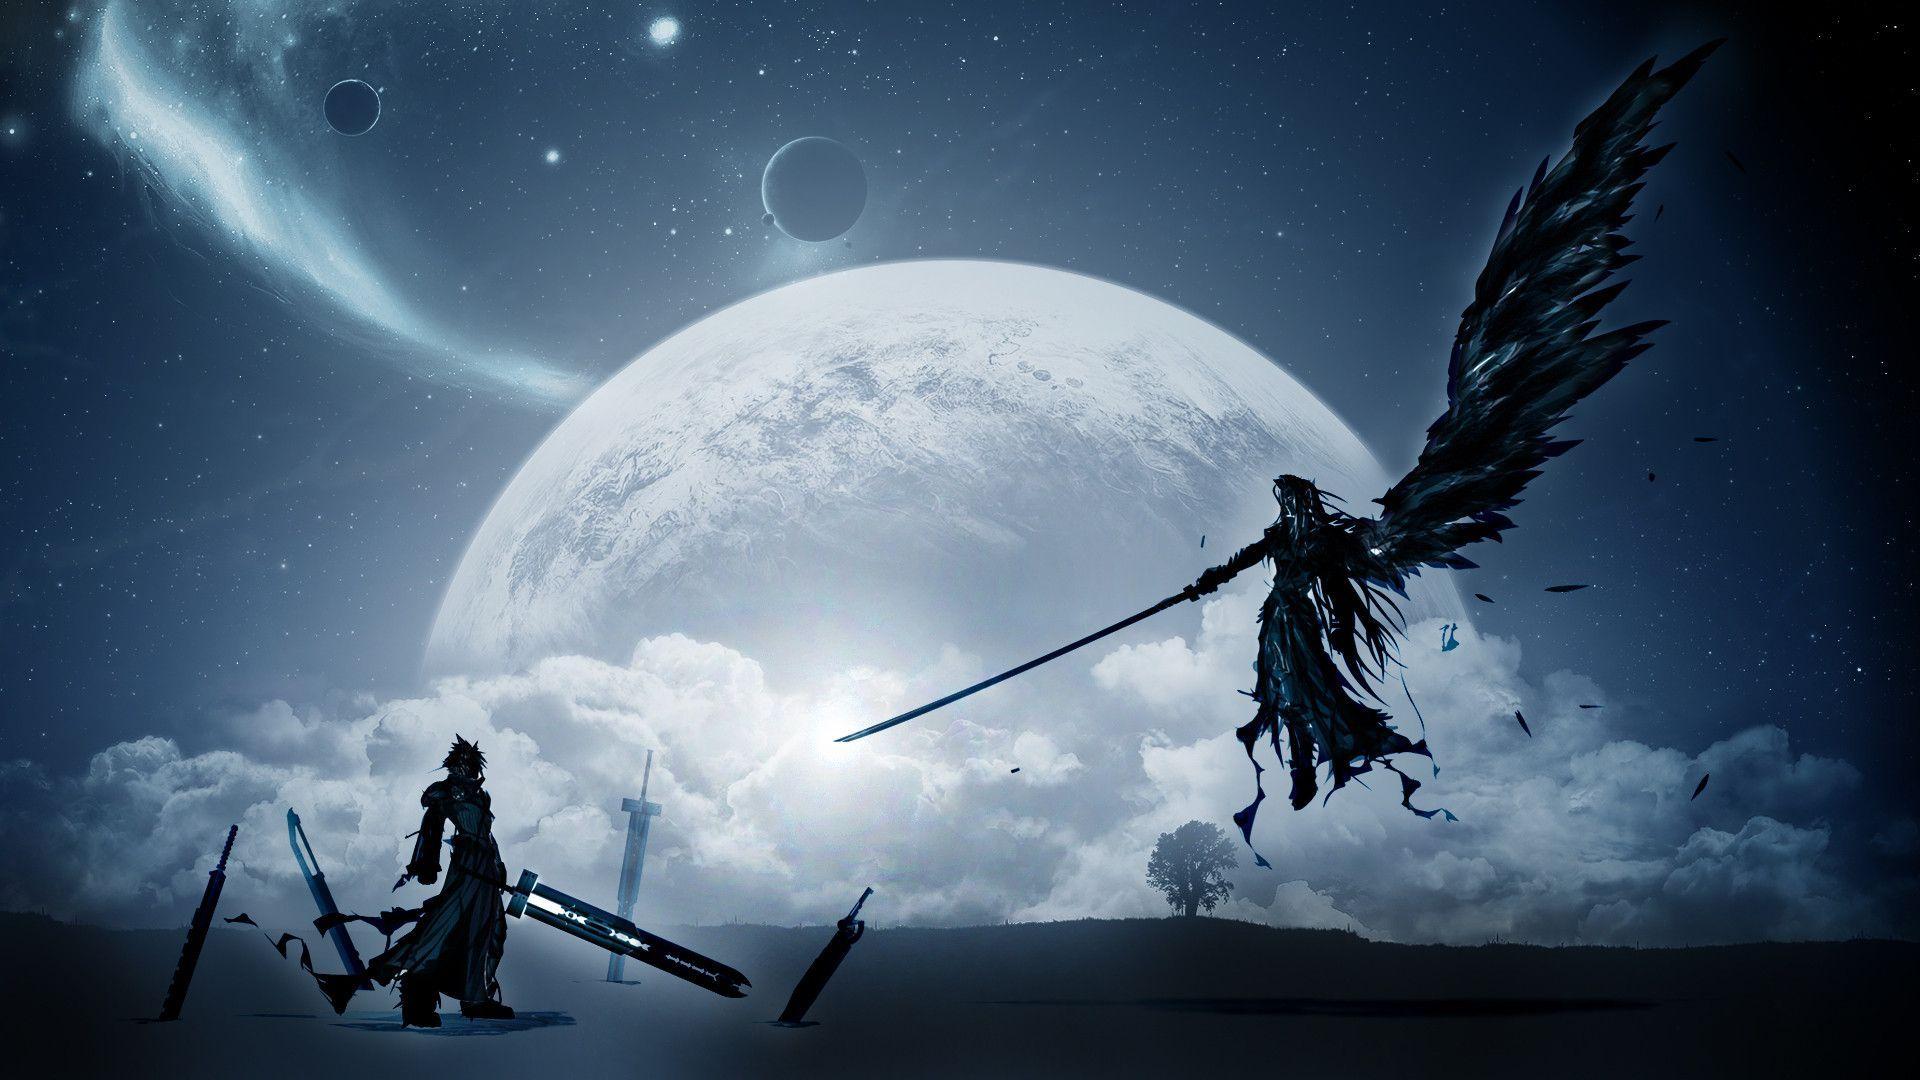 Final Fantasy Xv Wallpaper, Fantastic Final Fantasy Xv Image